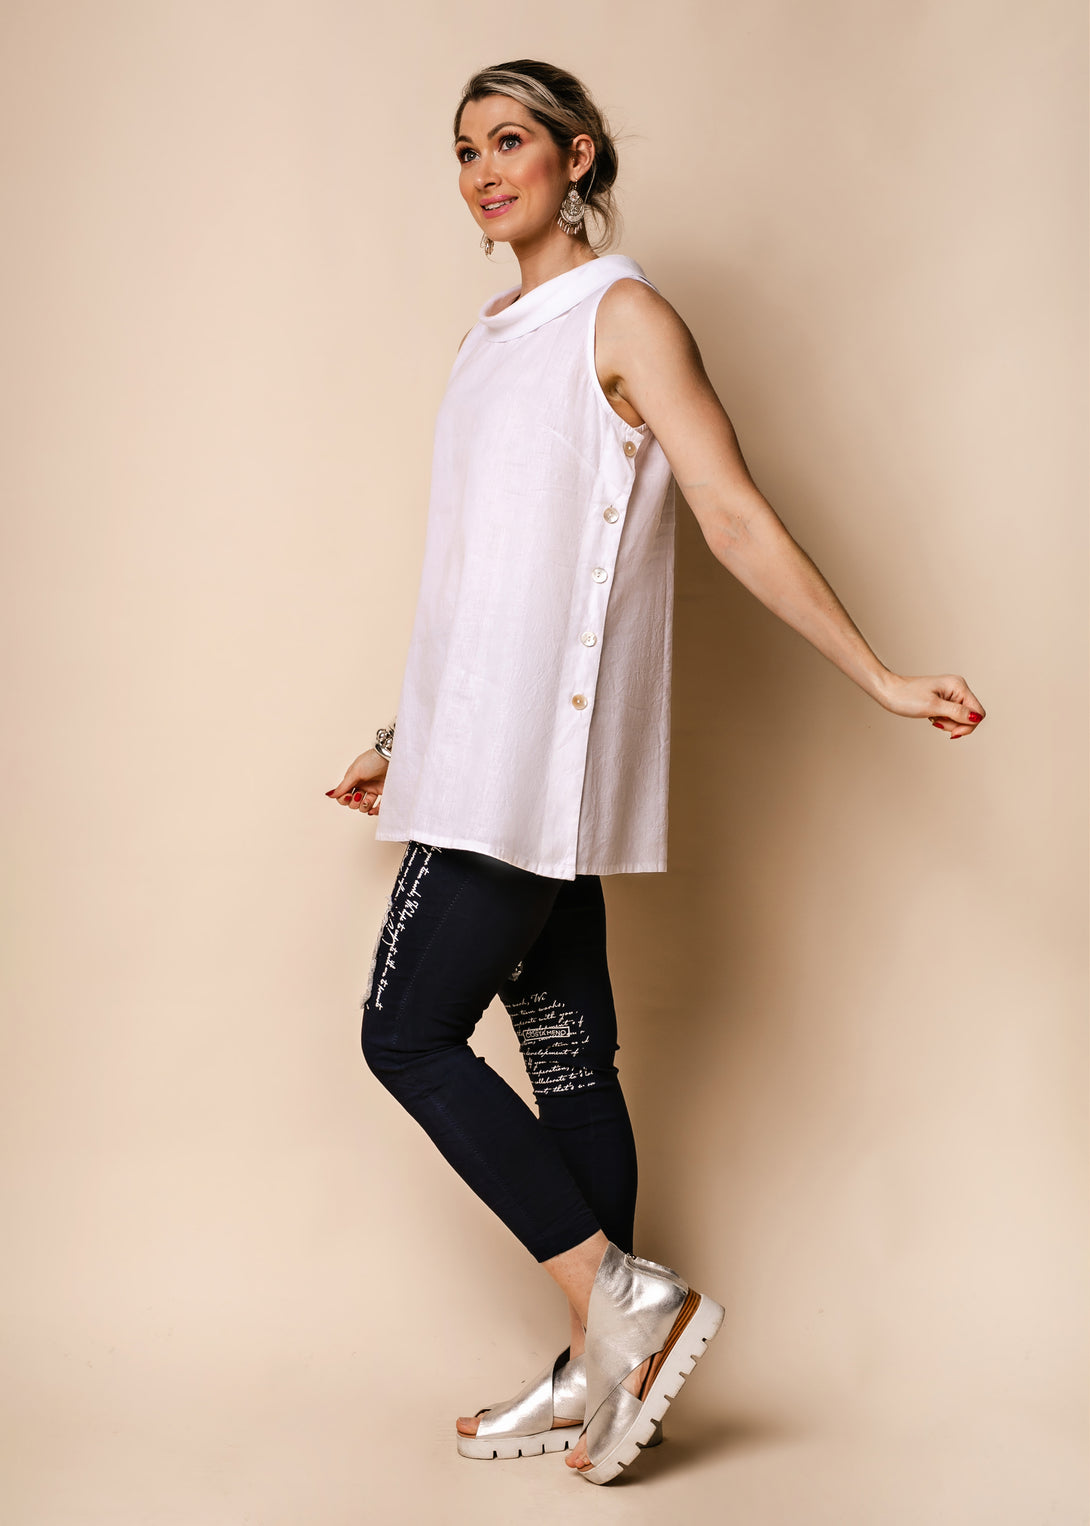 Levi Linen Blend Top in White - Imagine Fashion